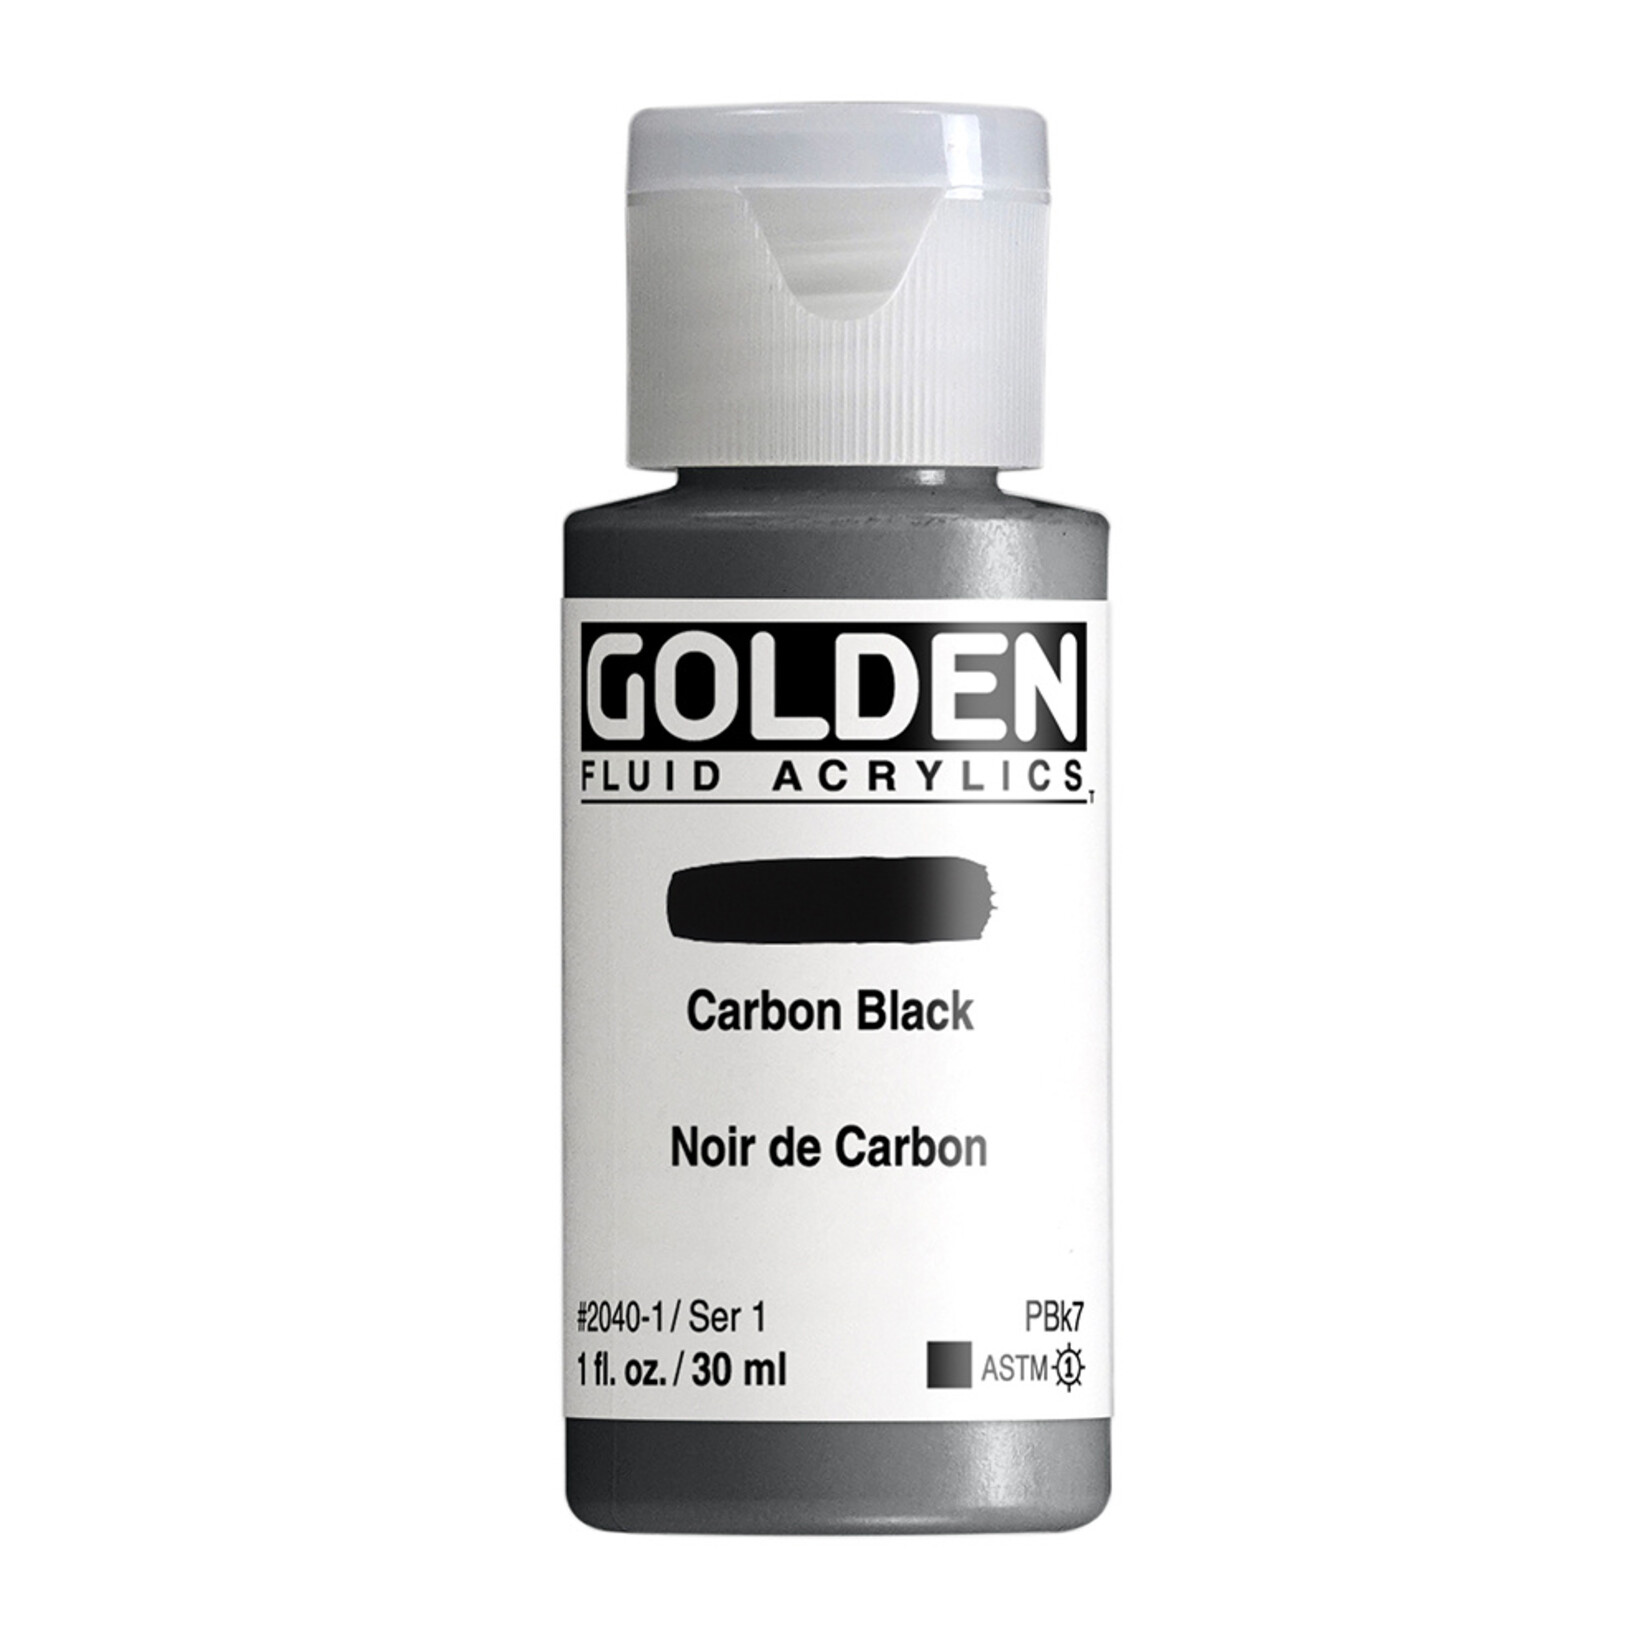 GOLDEN GOLDEN FLUID ACRYLIC 1OZ CARBON BLACK